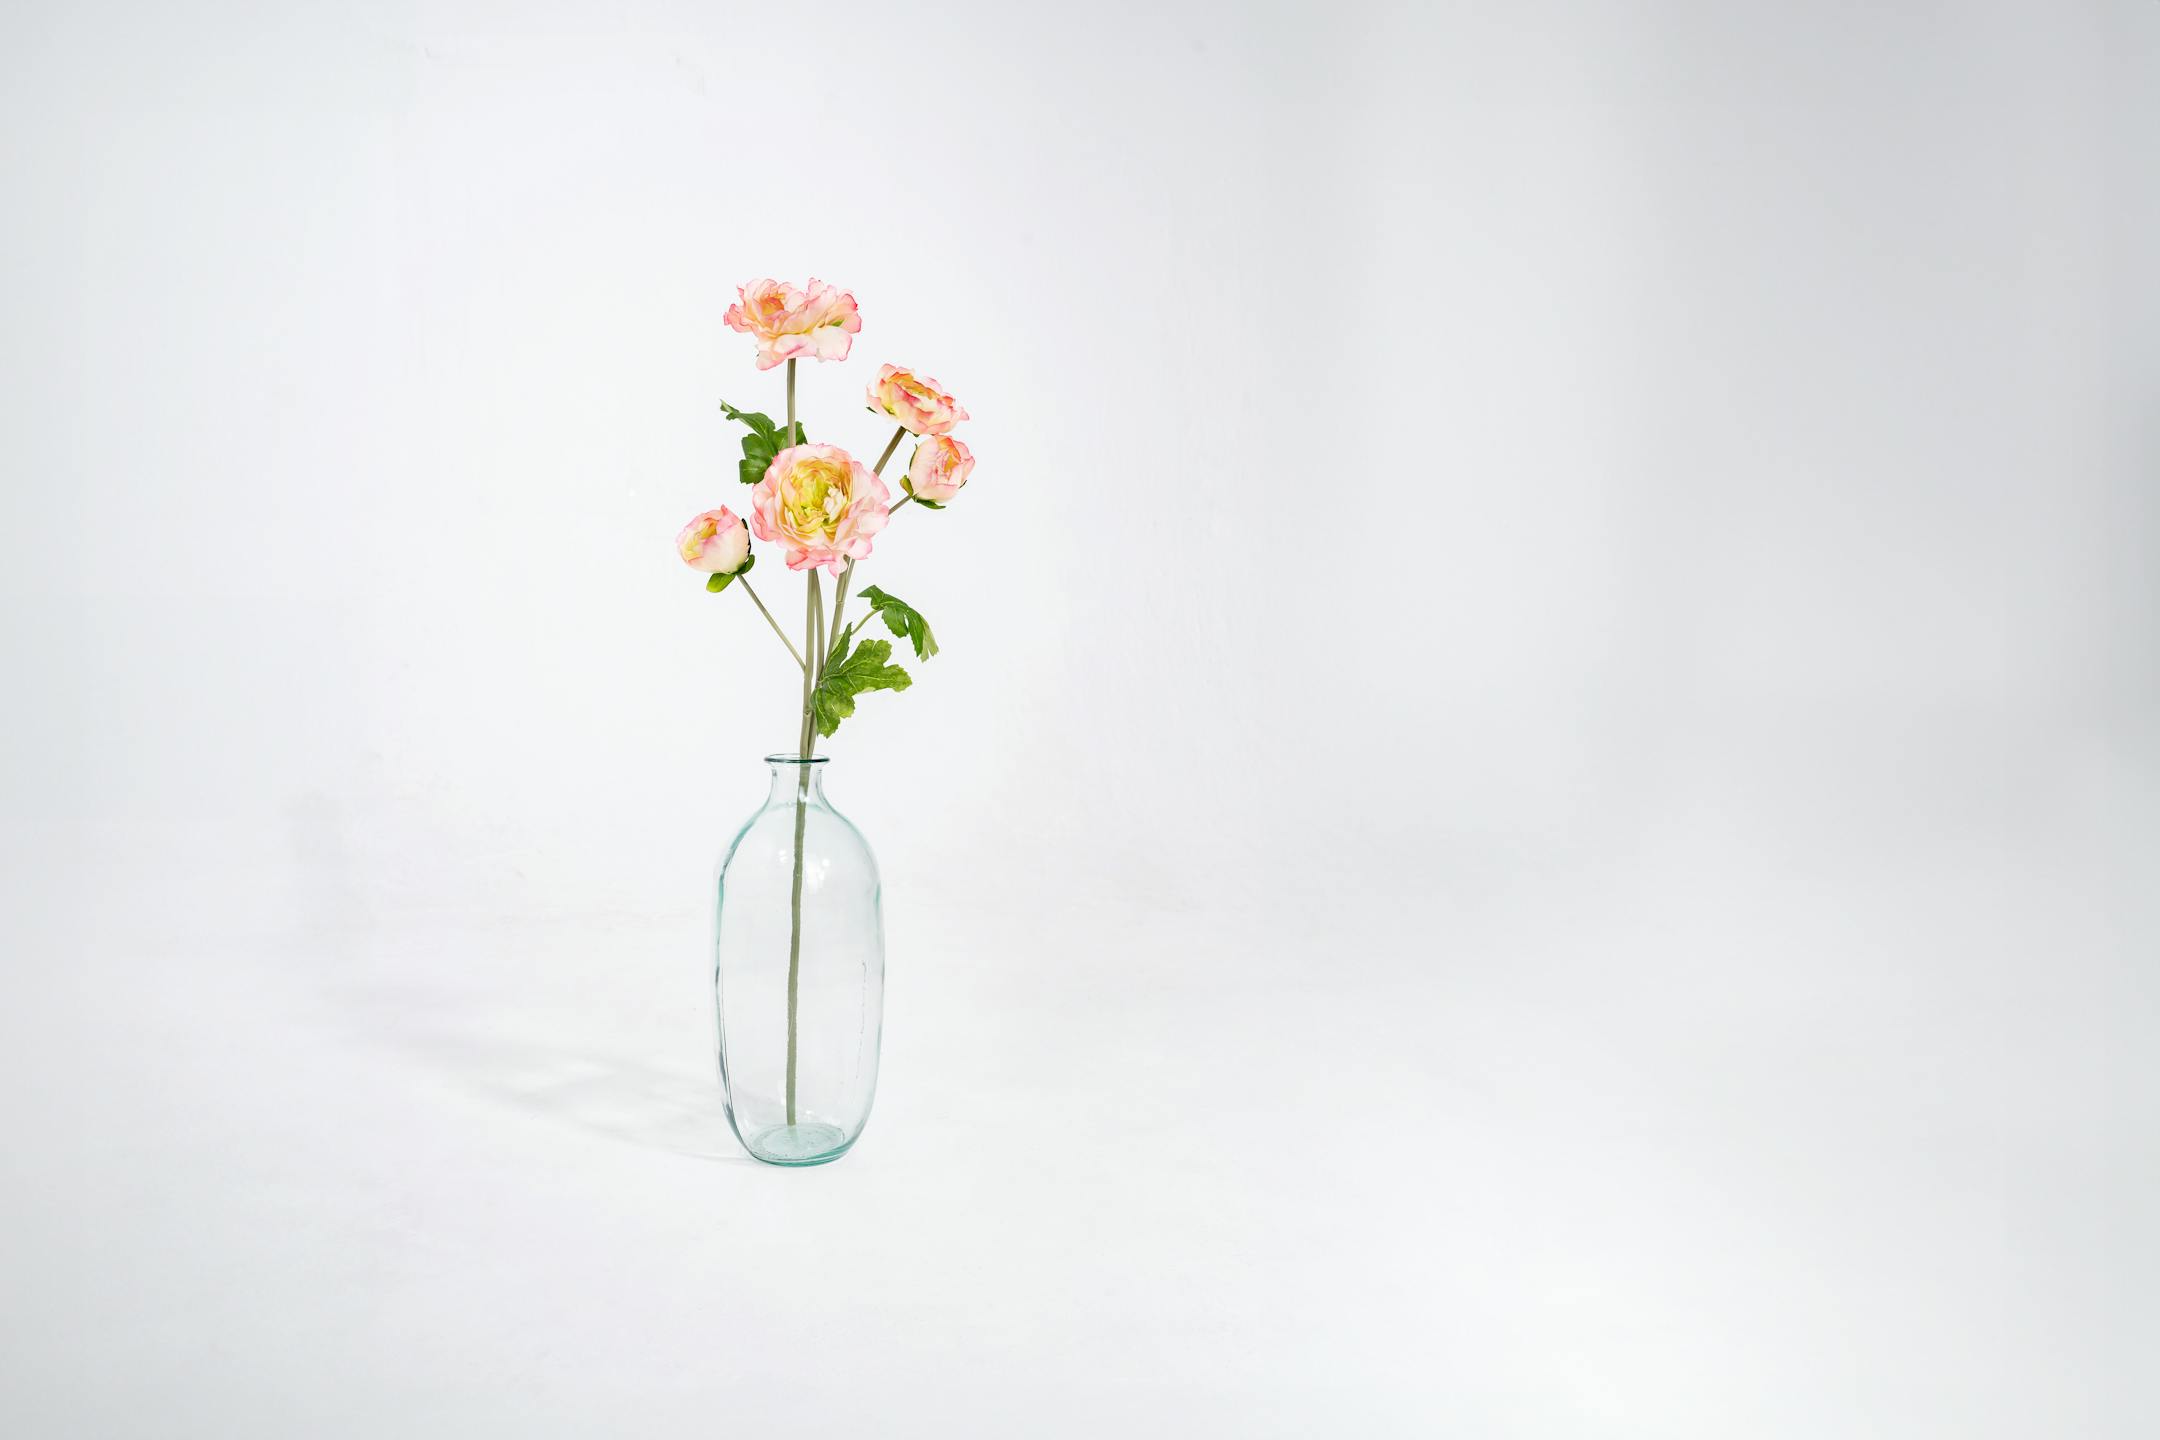 Coral artificial ranunculous stem in glass vase